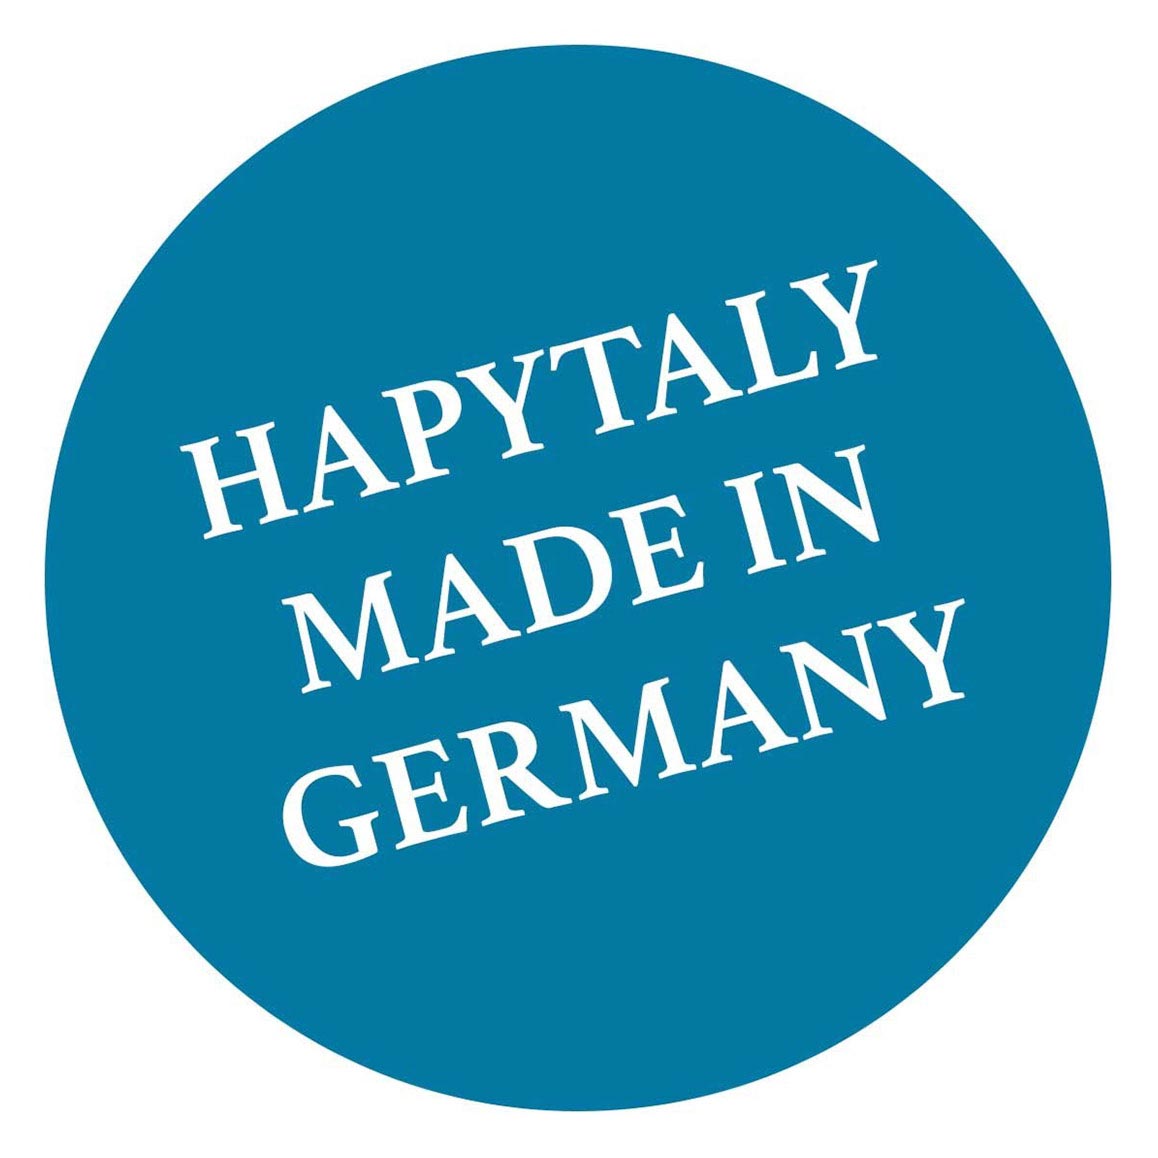 Hapytaly made in Germany